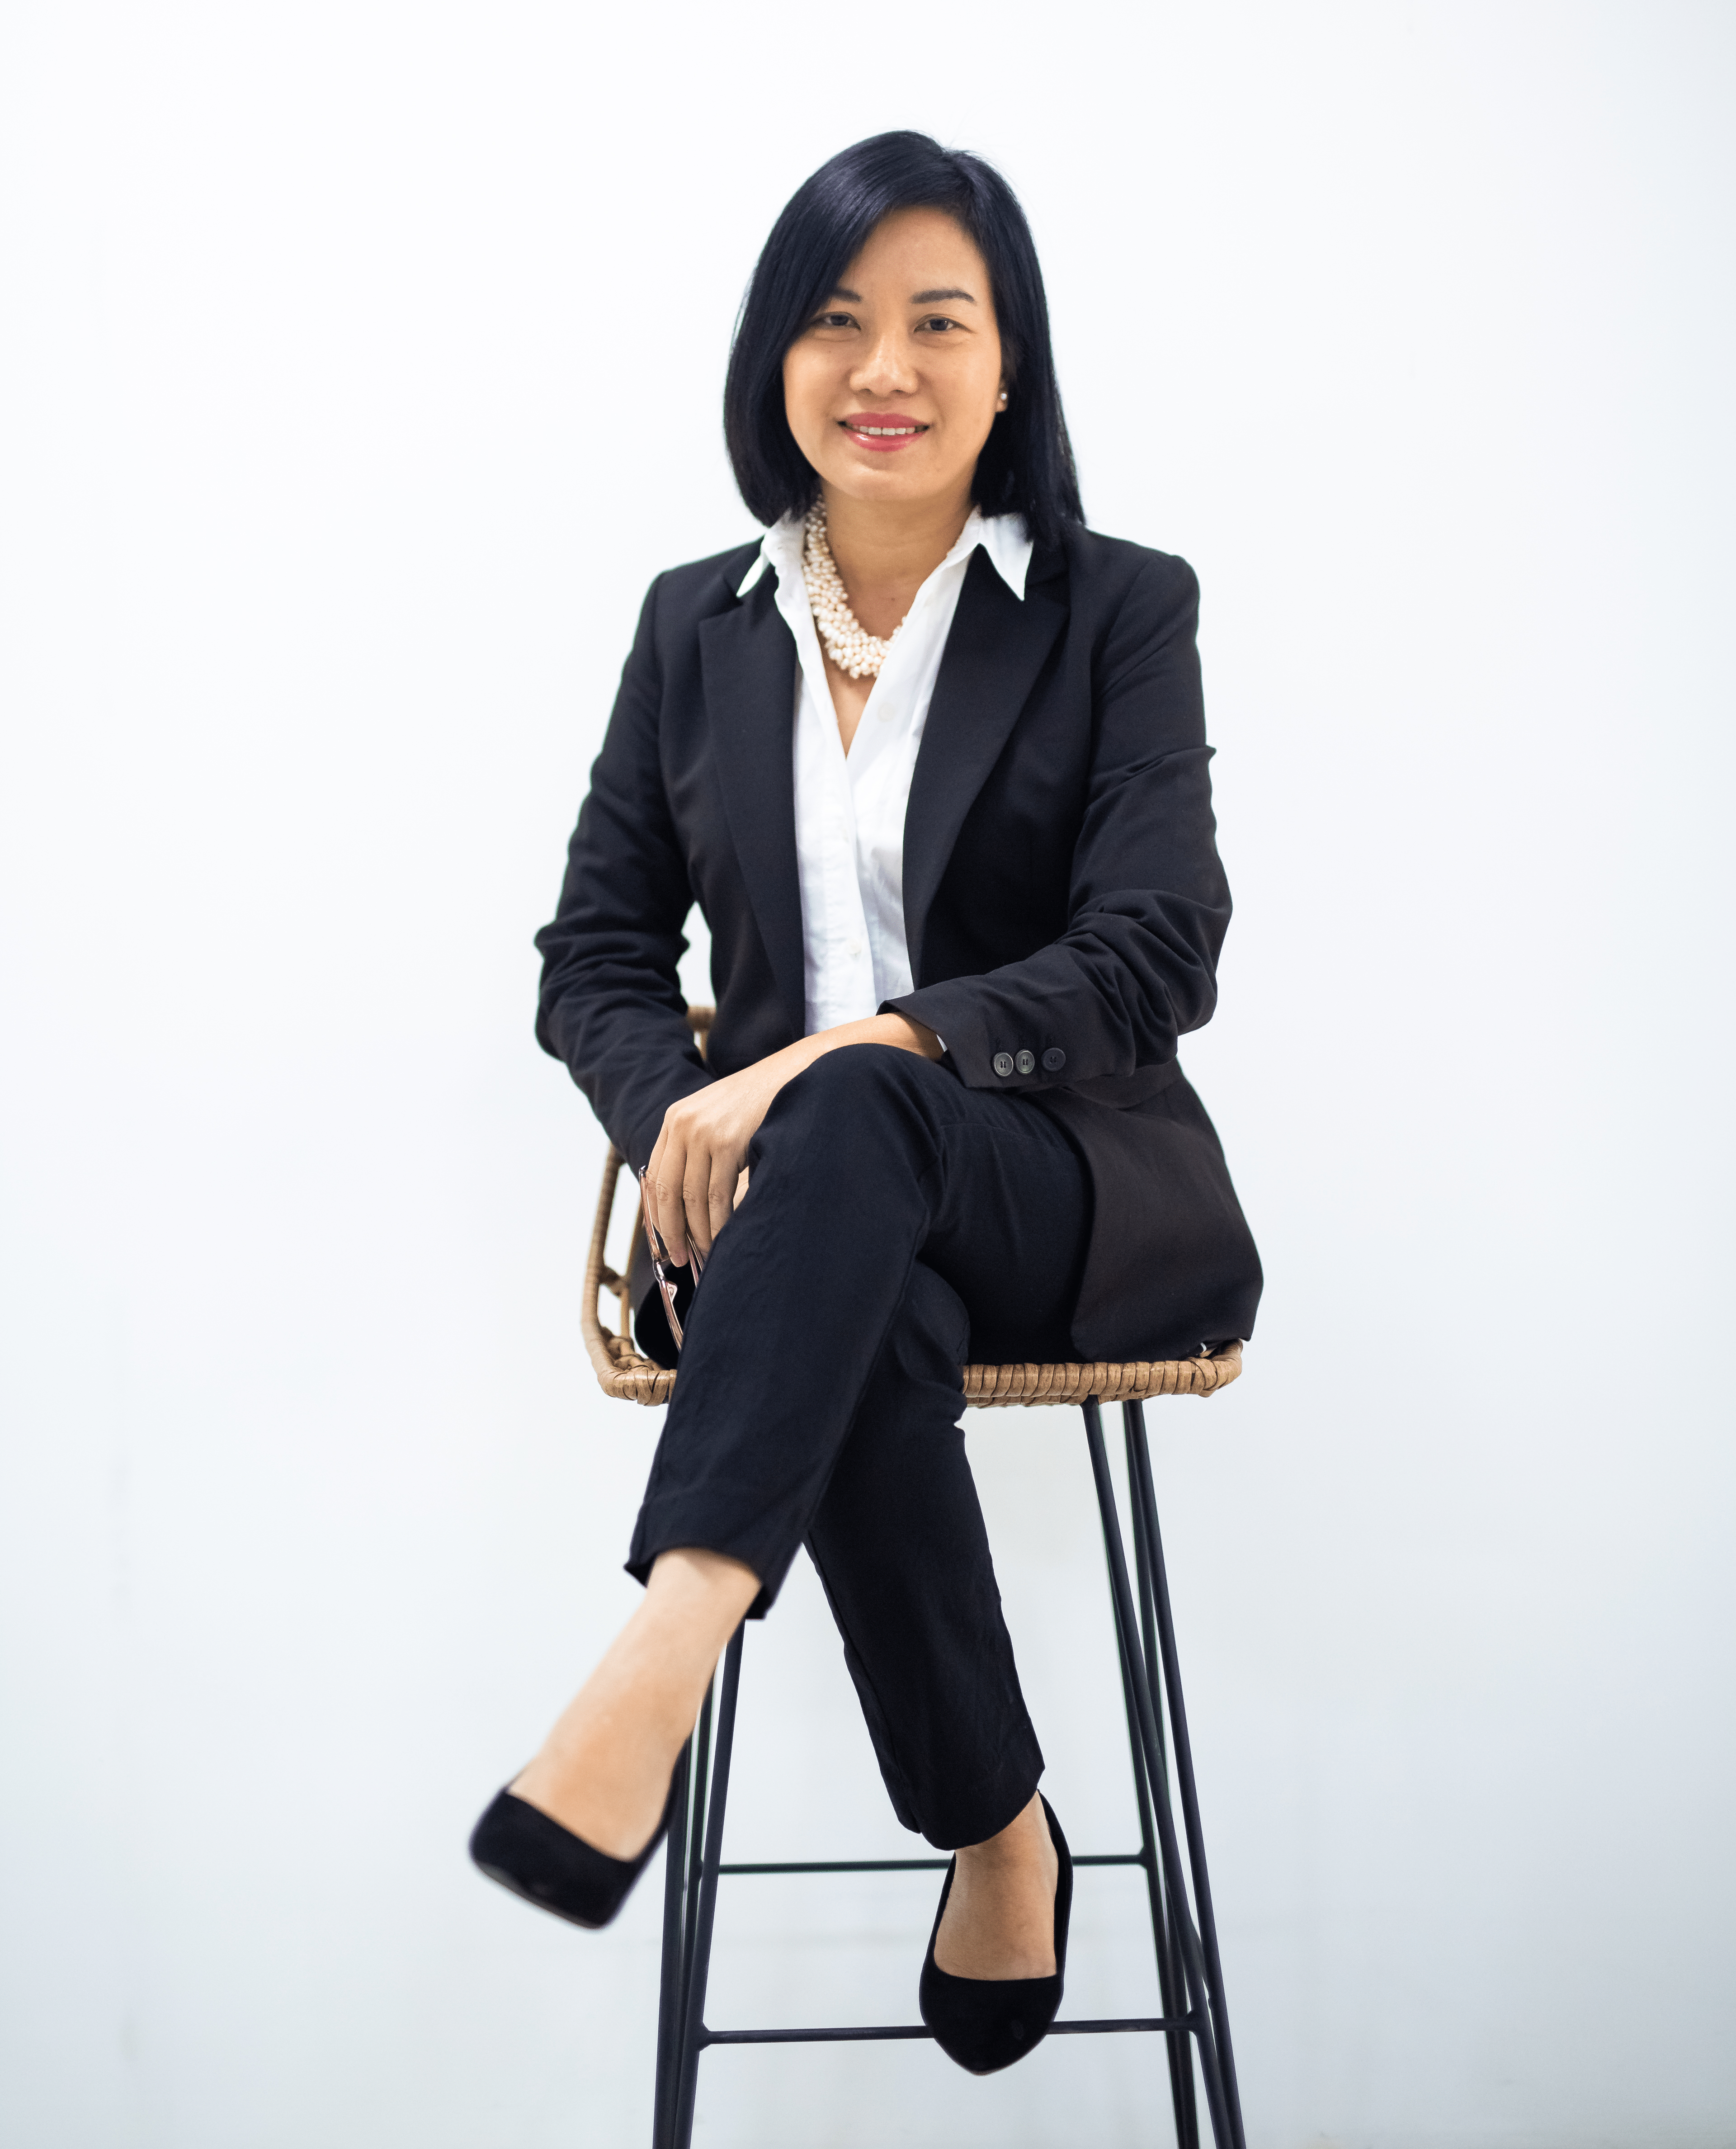 Rita Huang - CEO